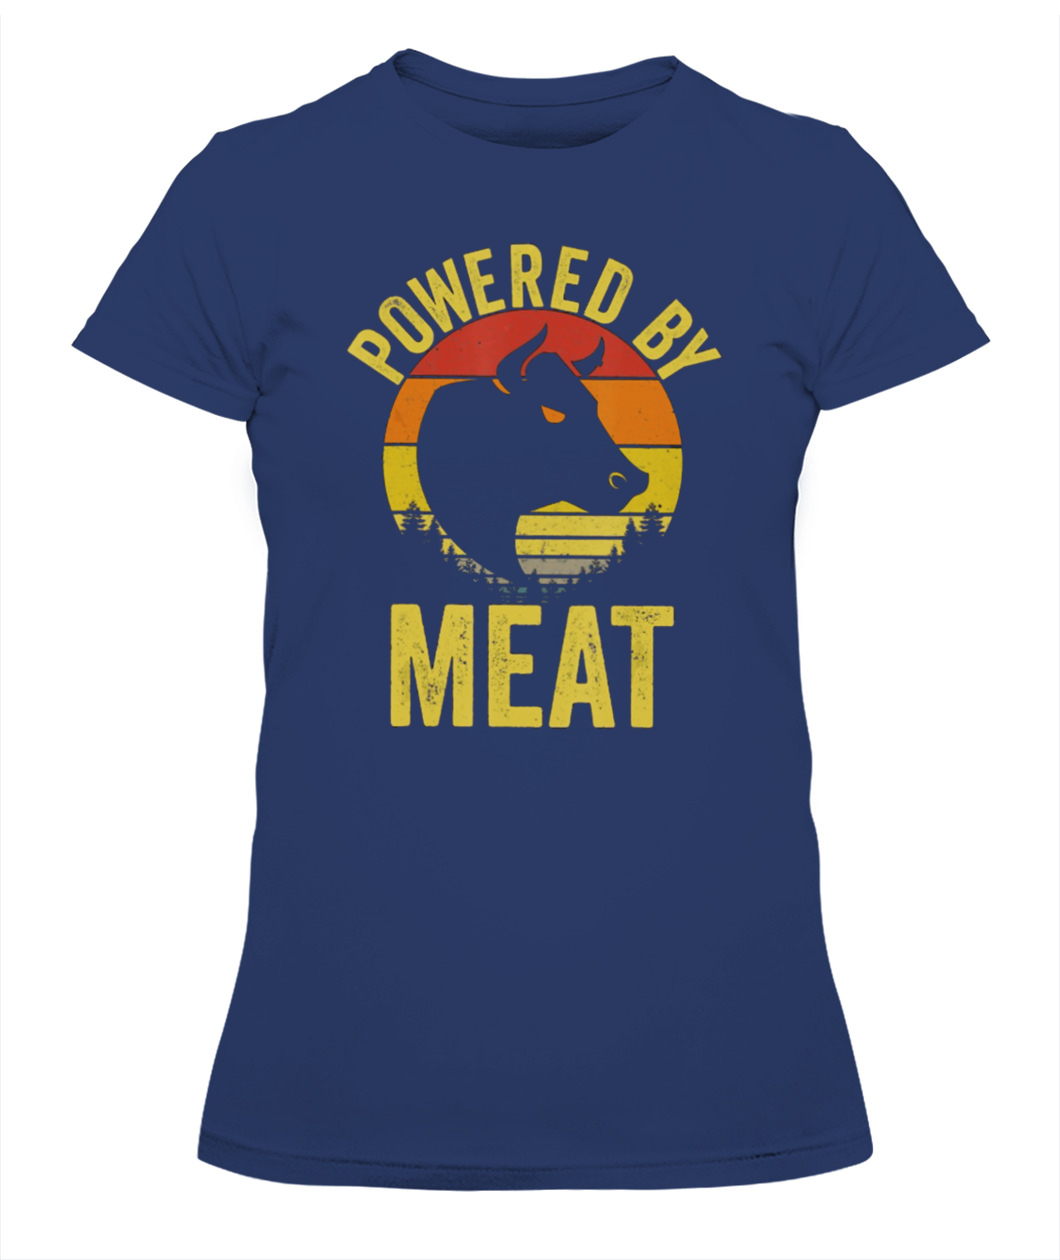 Fuelled by Bone Broth T-shirt Bone Broth T-Shirt Carnivore Unisex T-Shirt Meat Eater Carnivore T-shirt